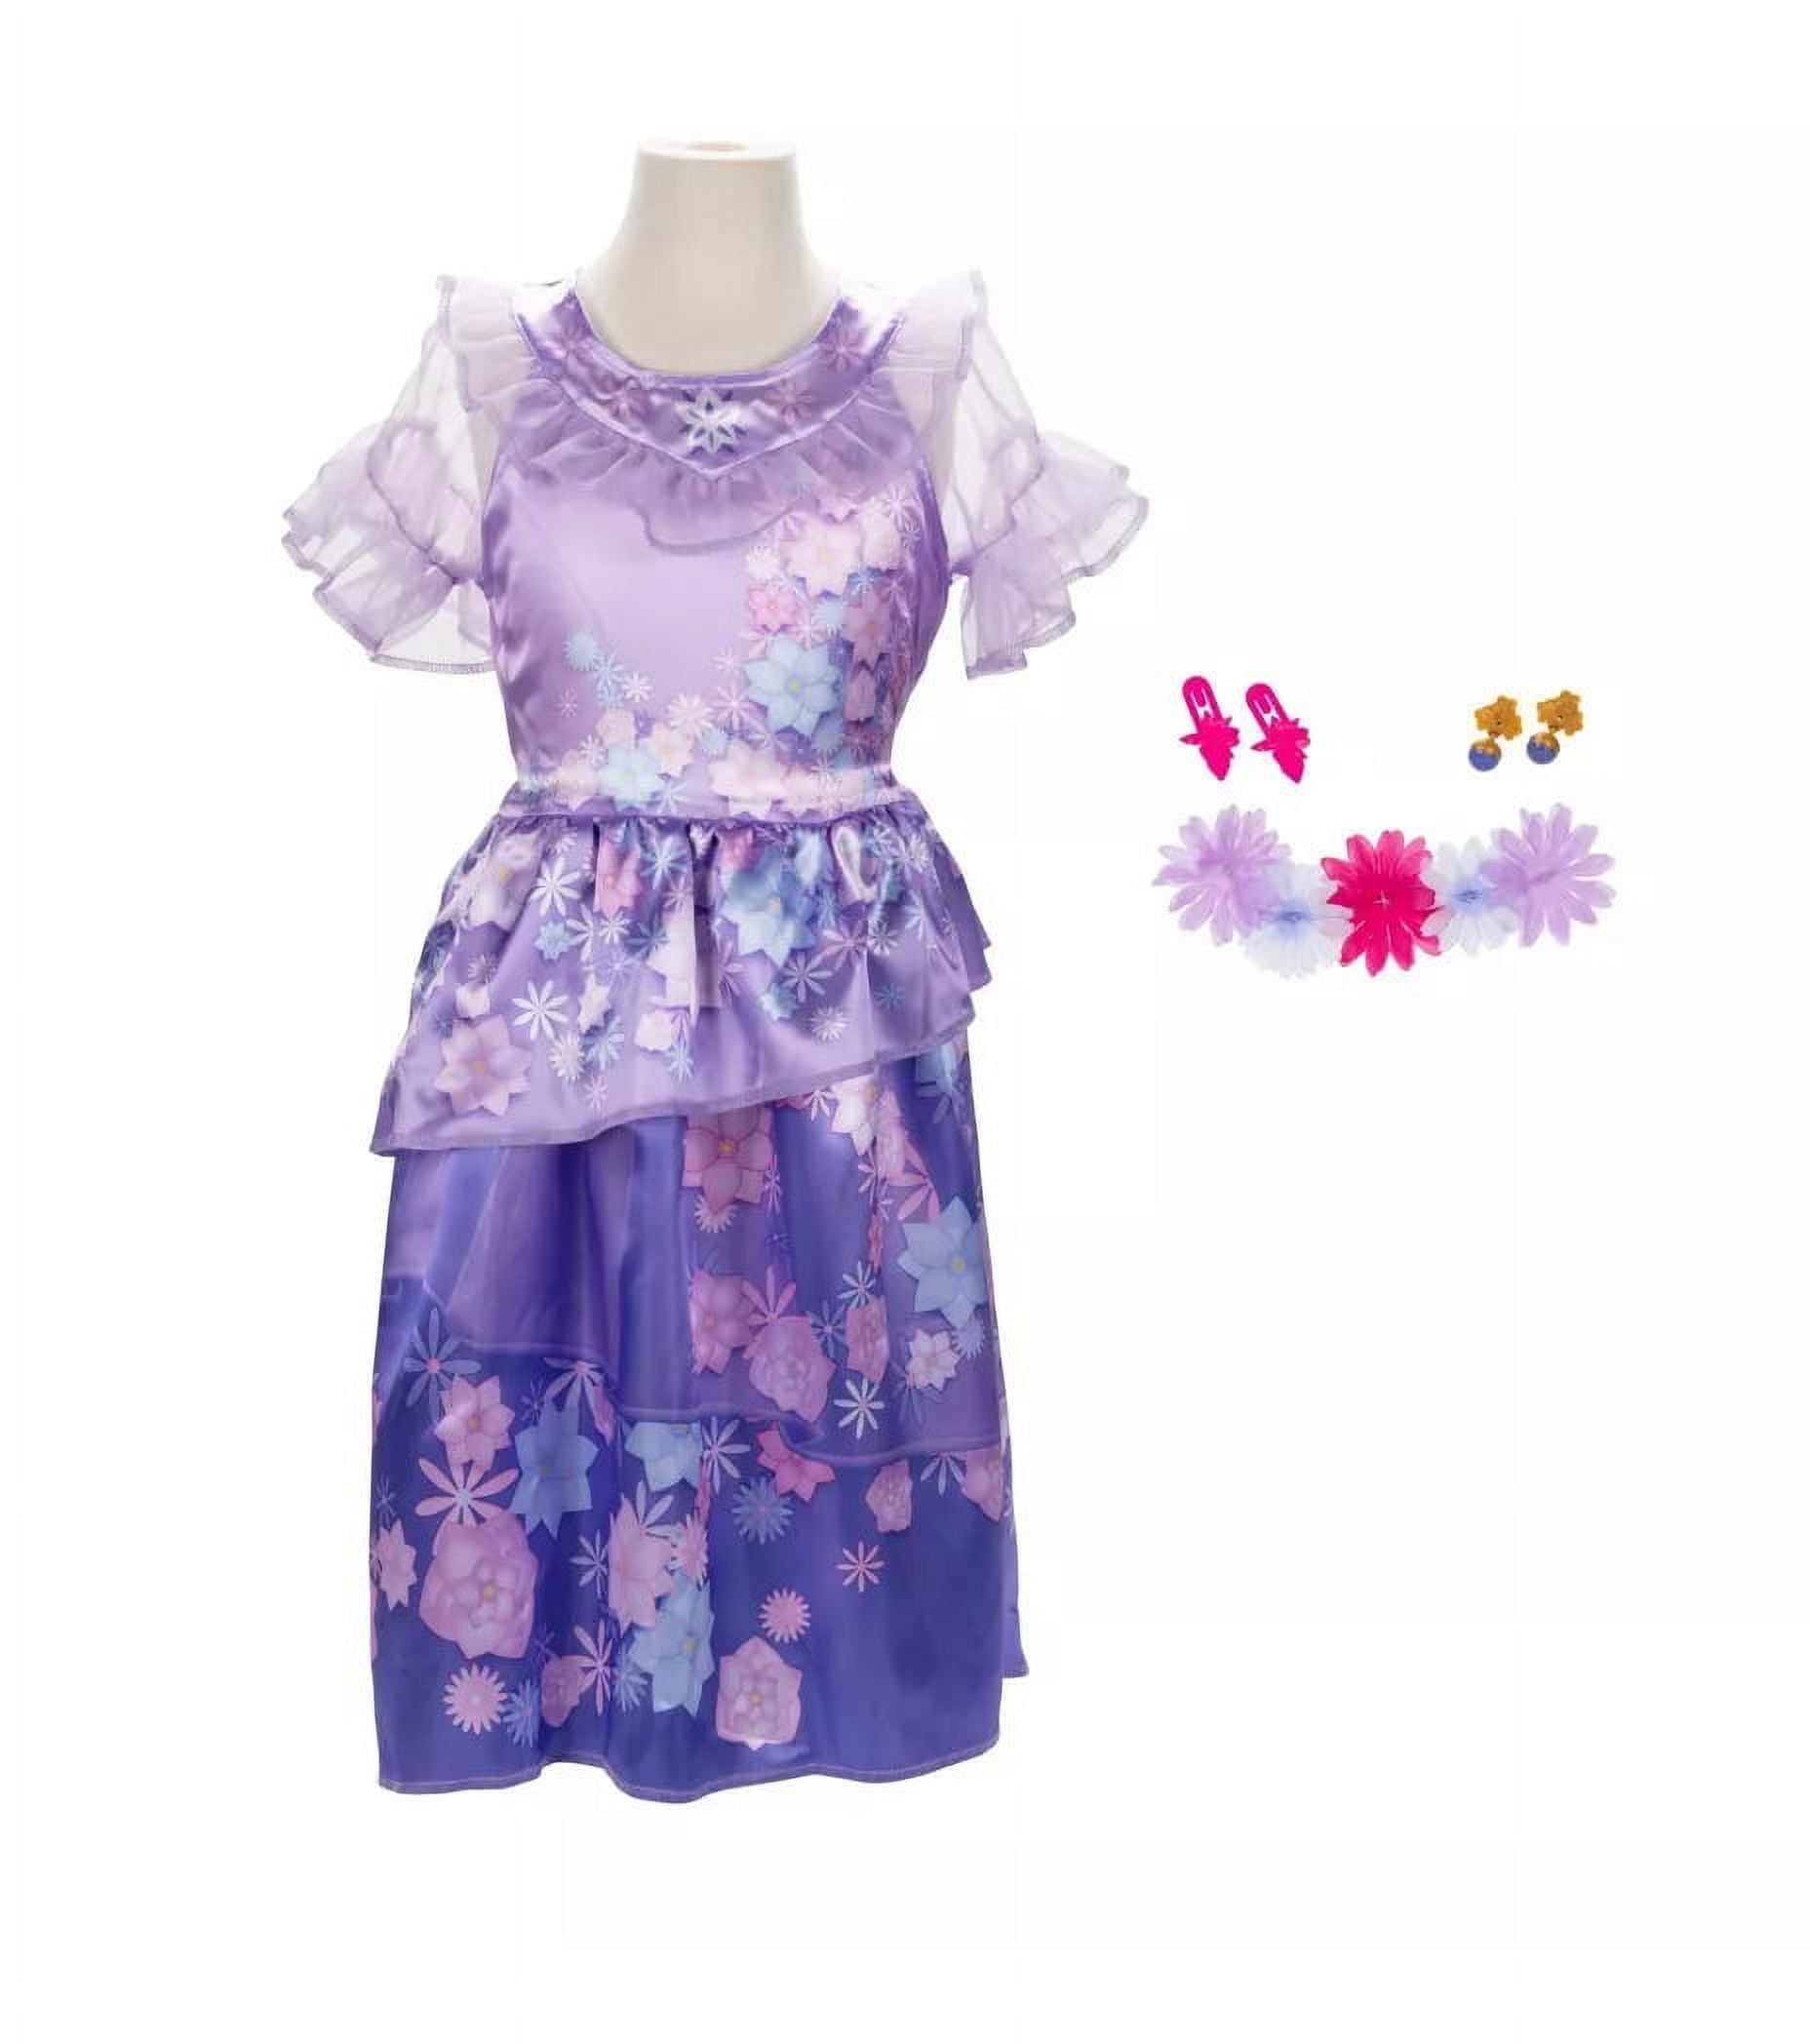 Disney Encanto Isabela Dress Up Set - Fits Sizes 4-6x - New